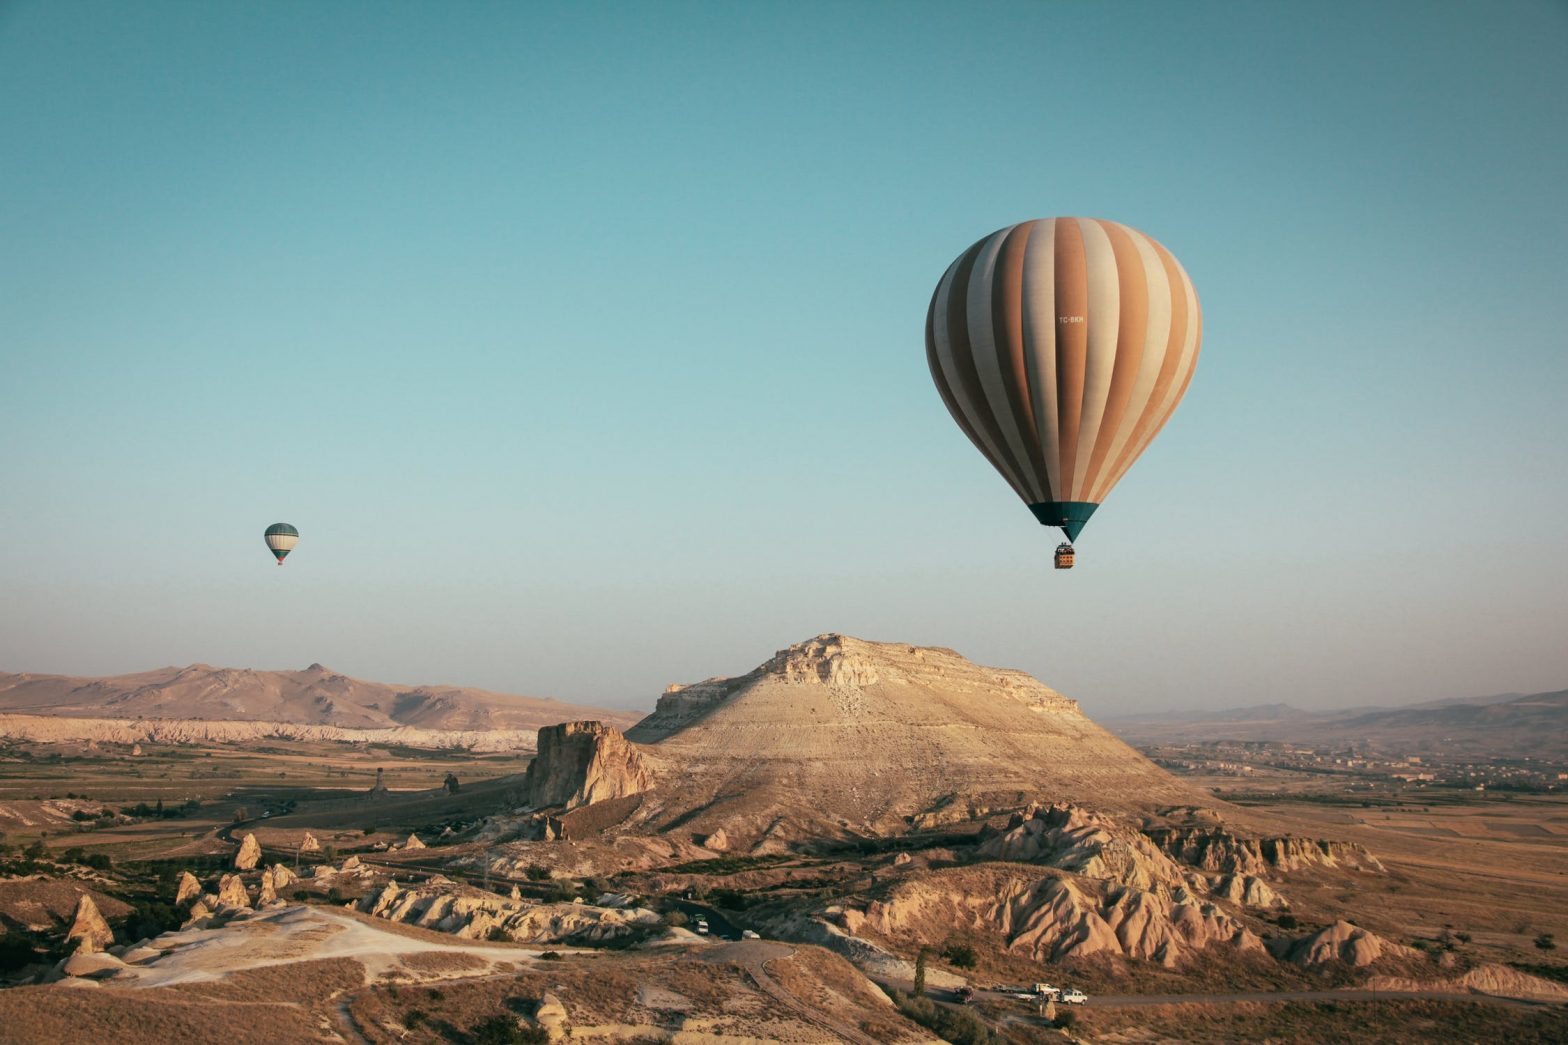  Balloon flight is a breakthrough in aviation history